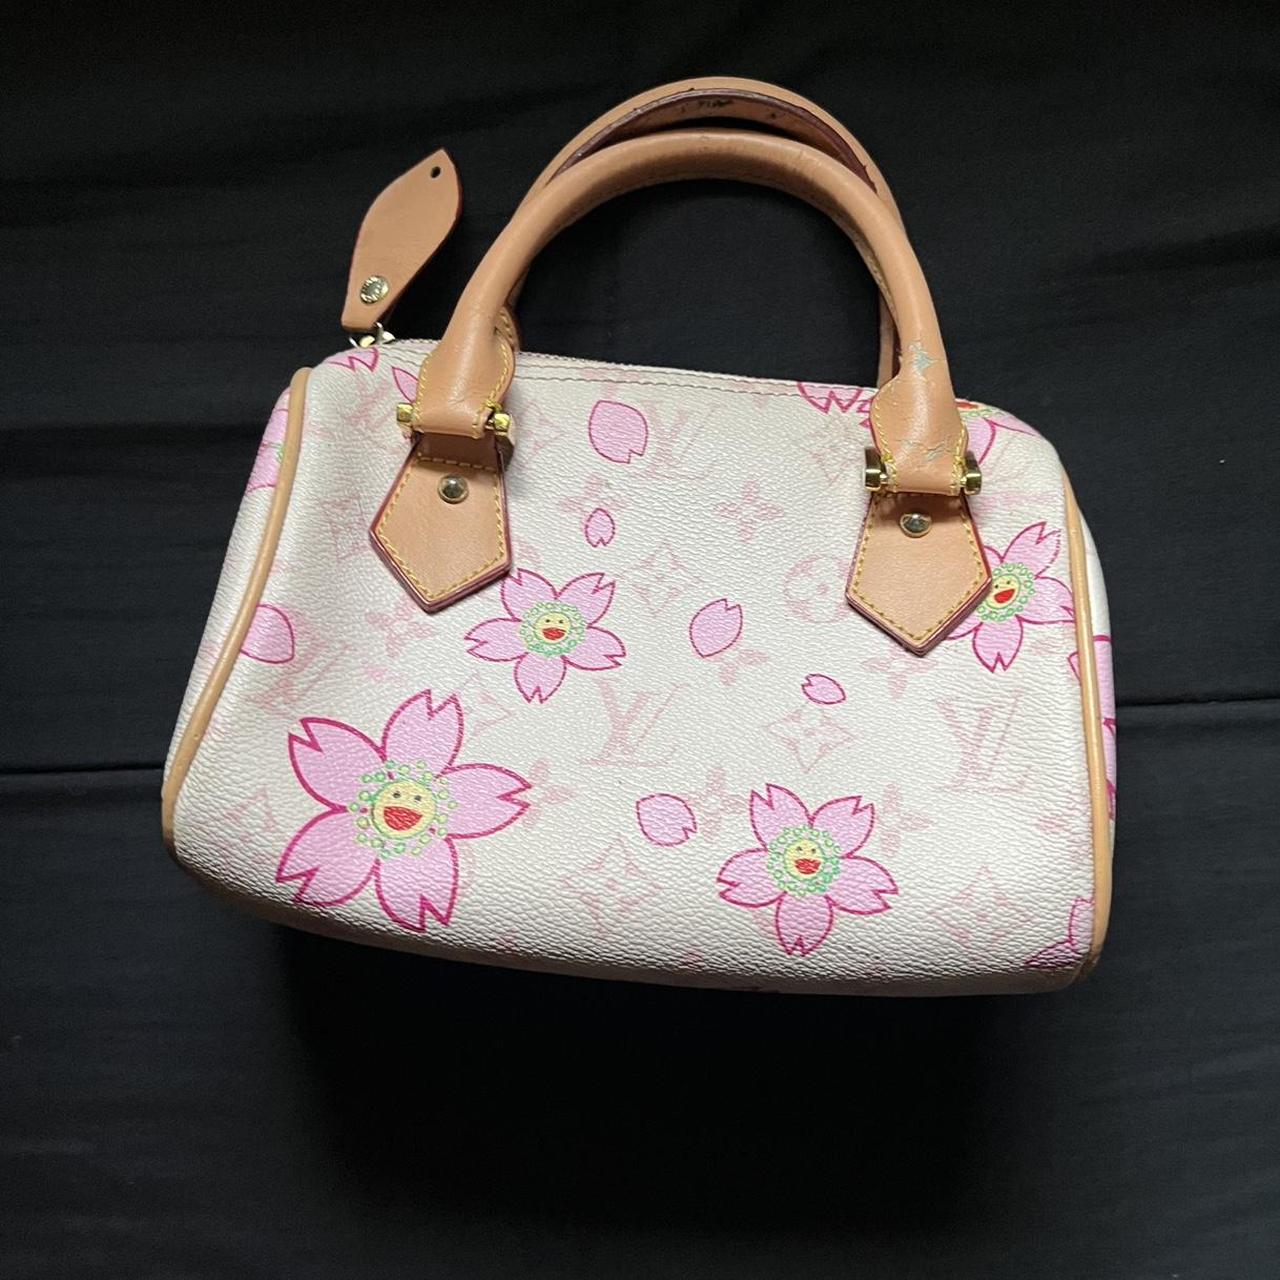 Buy LV Blossom PM tote bag @ $250.00